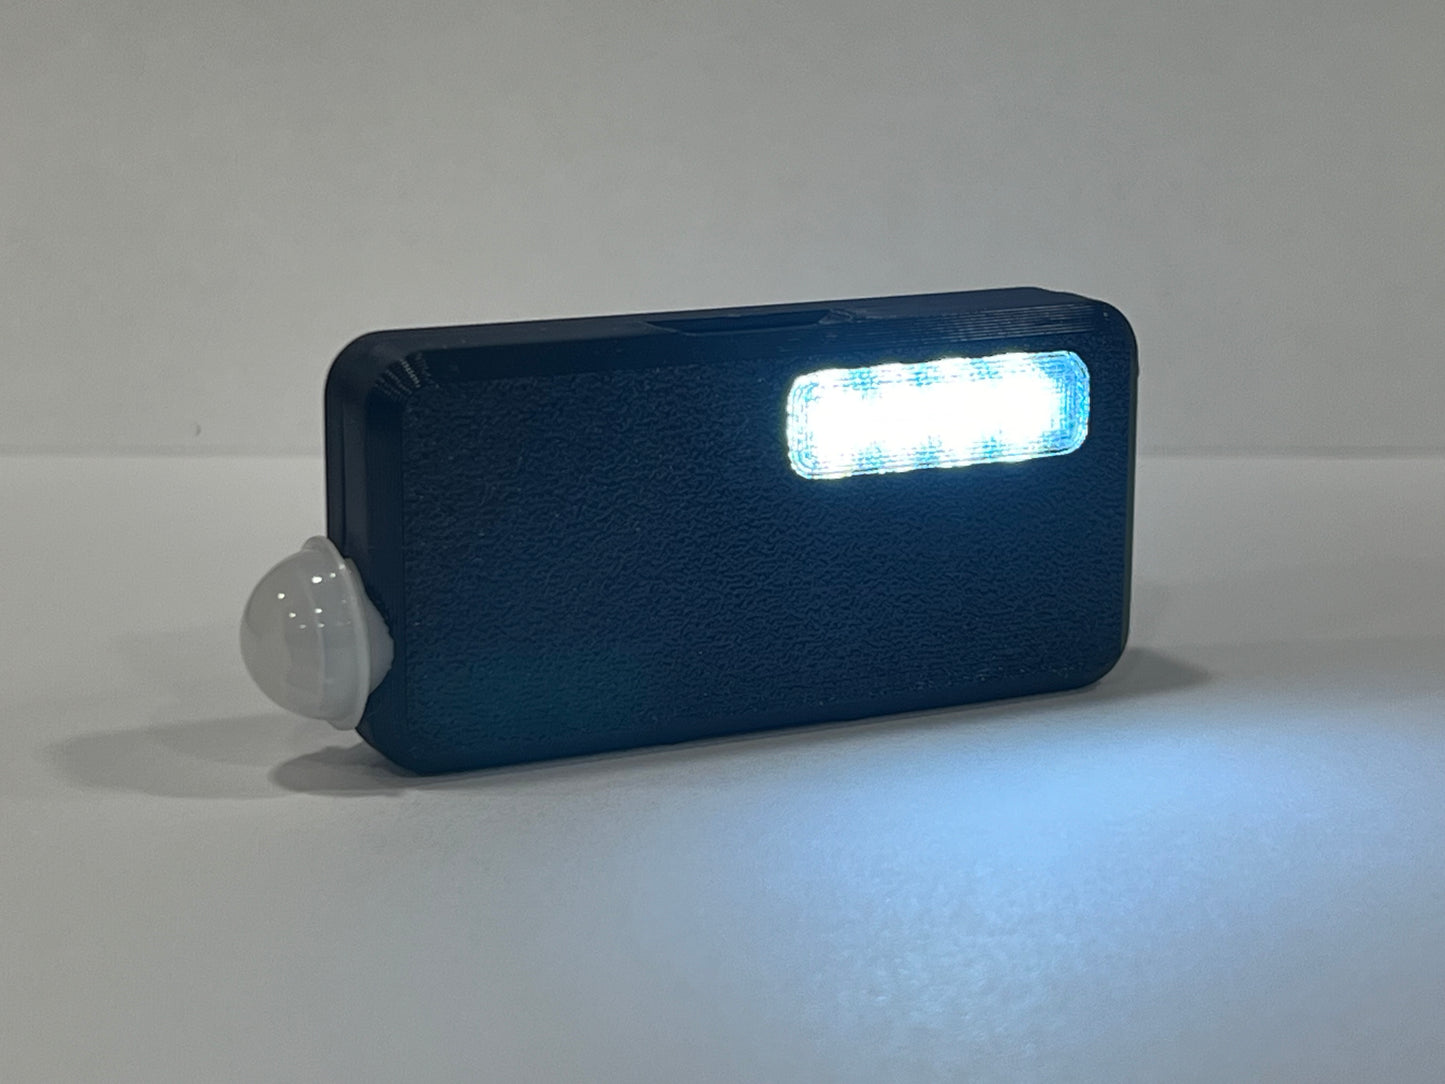 GlowBoxLite universal motion sensing light for the glovebox